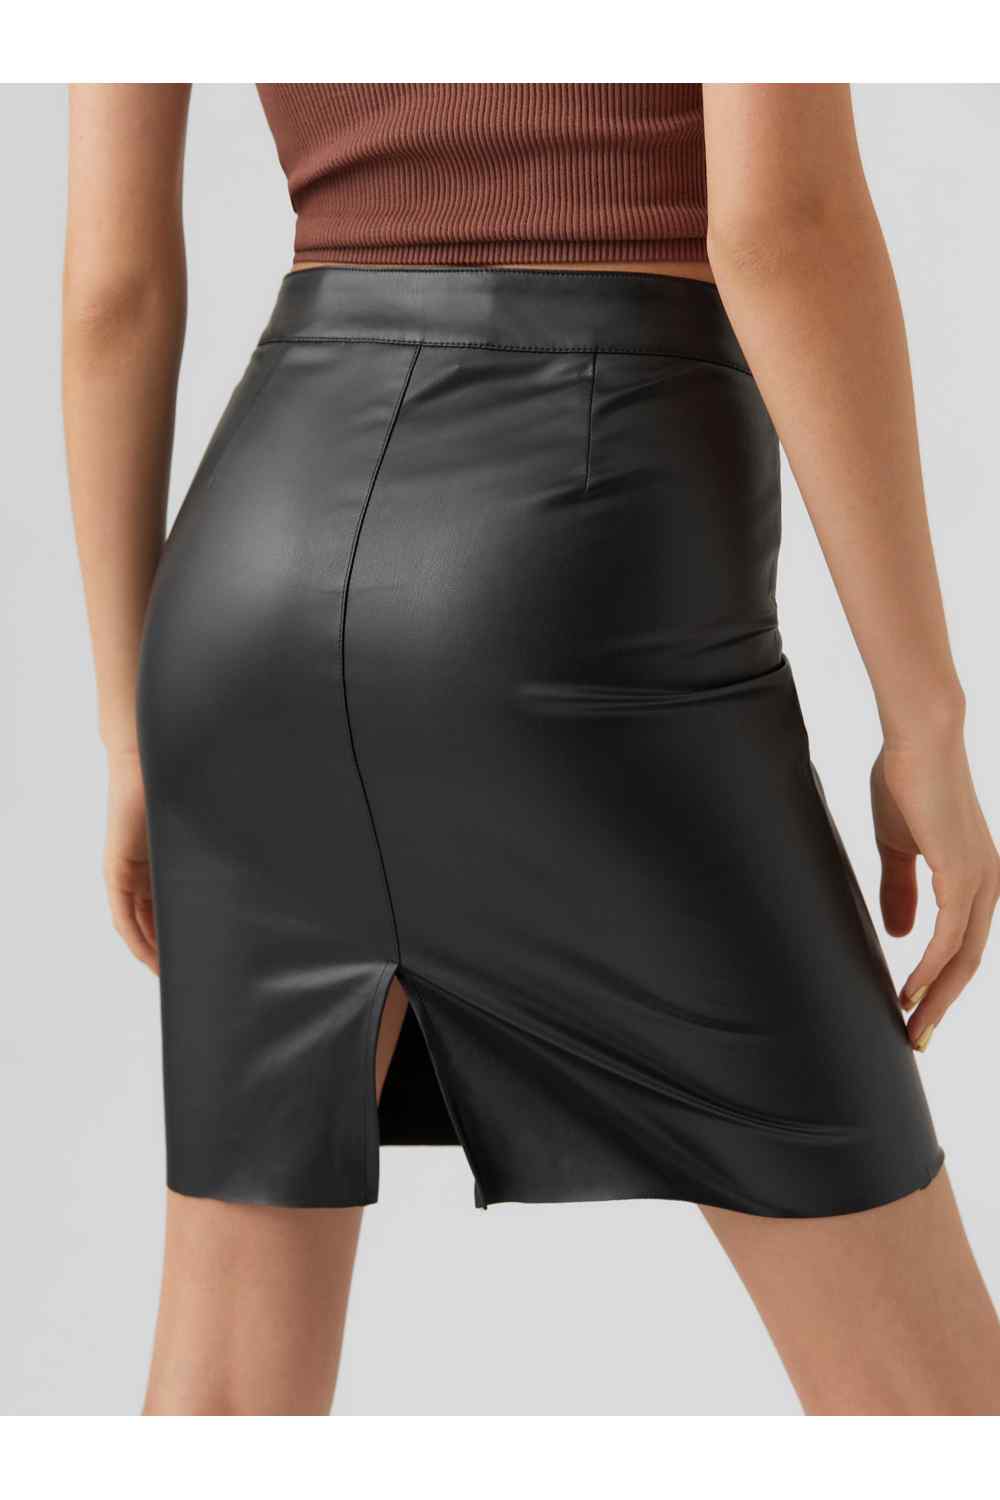 Vero Moda Olympia Skirt - Black 2 Shaws Department Stores